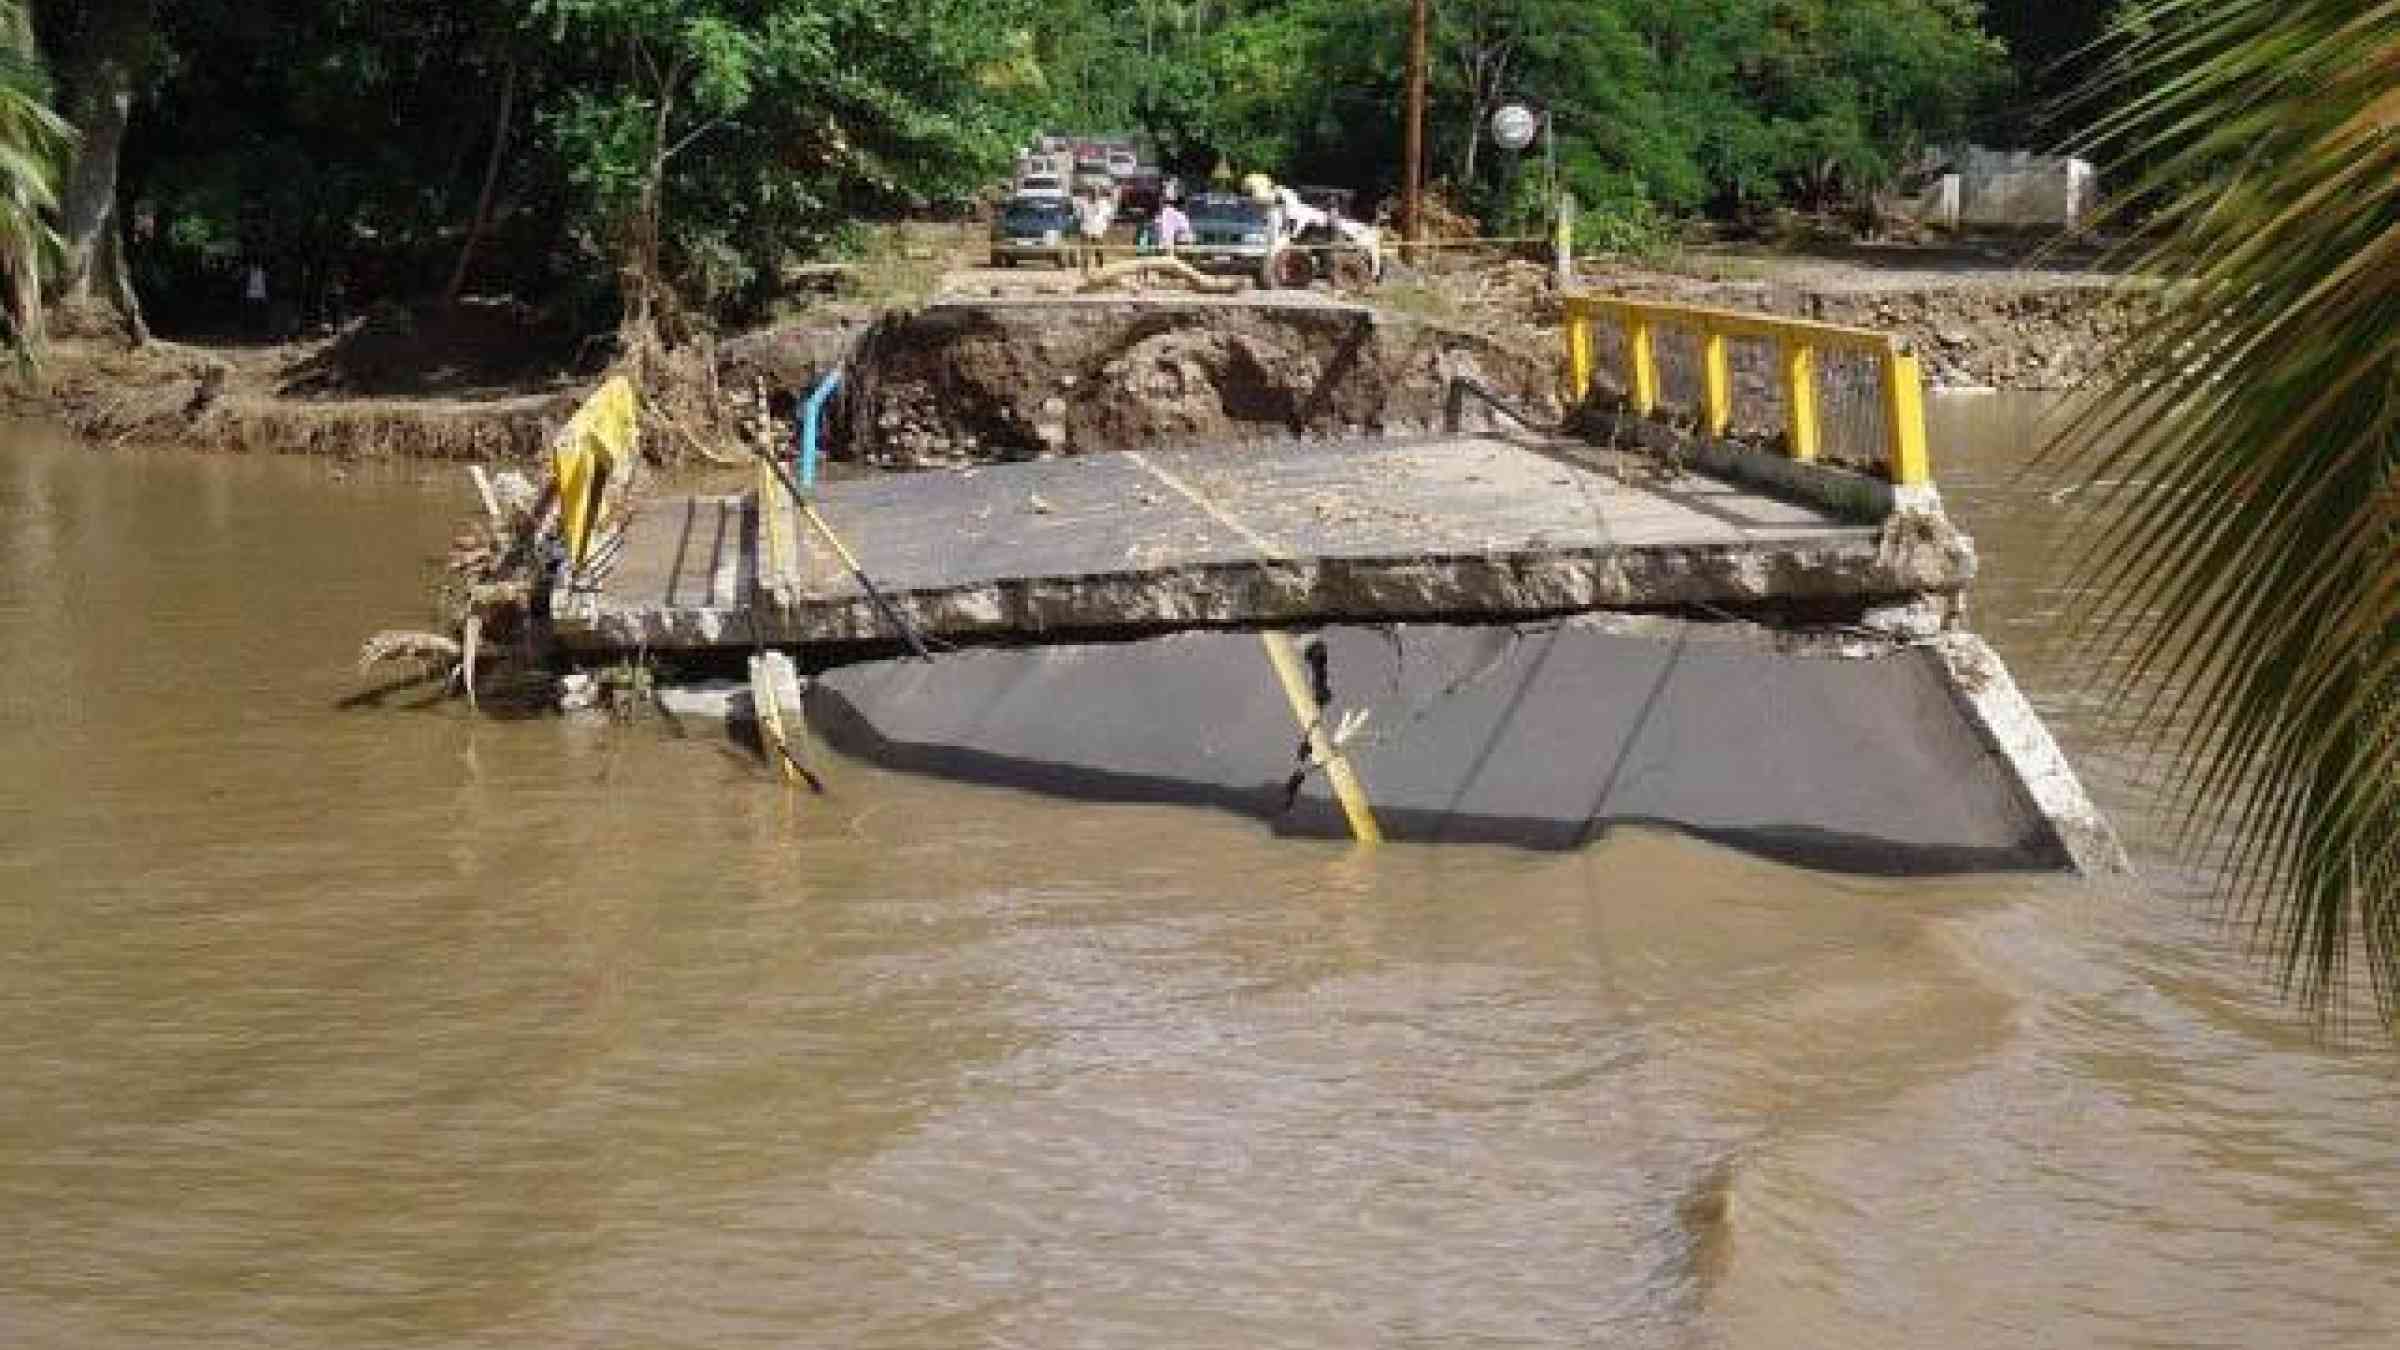 Batalie bridge – one of the several bridges damaged or destroyed by Tropical Storm Erika